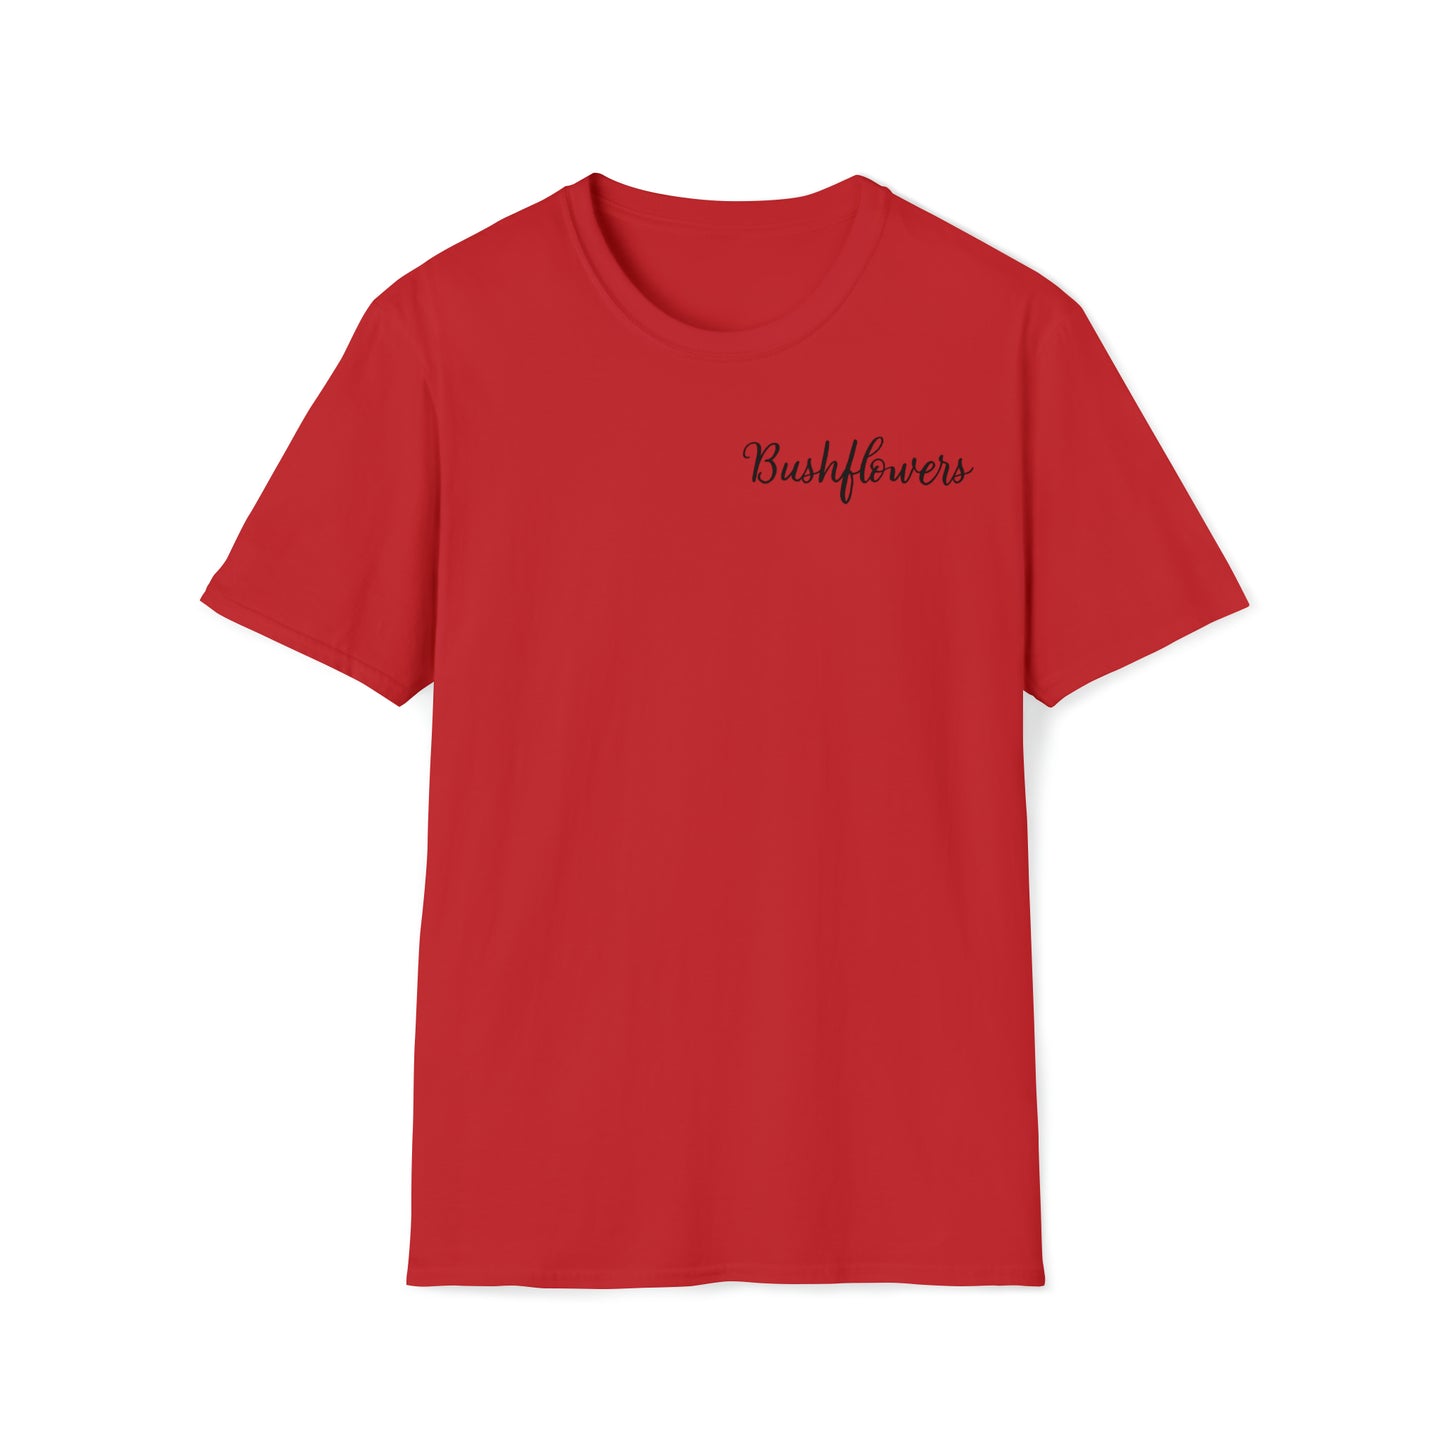 Bushflowers Shirt Version 4